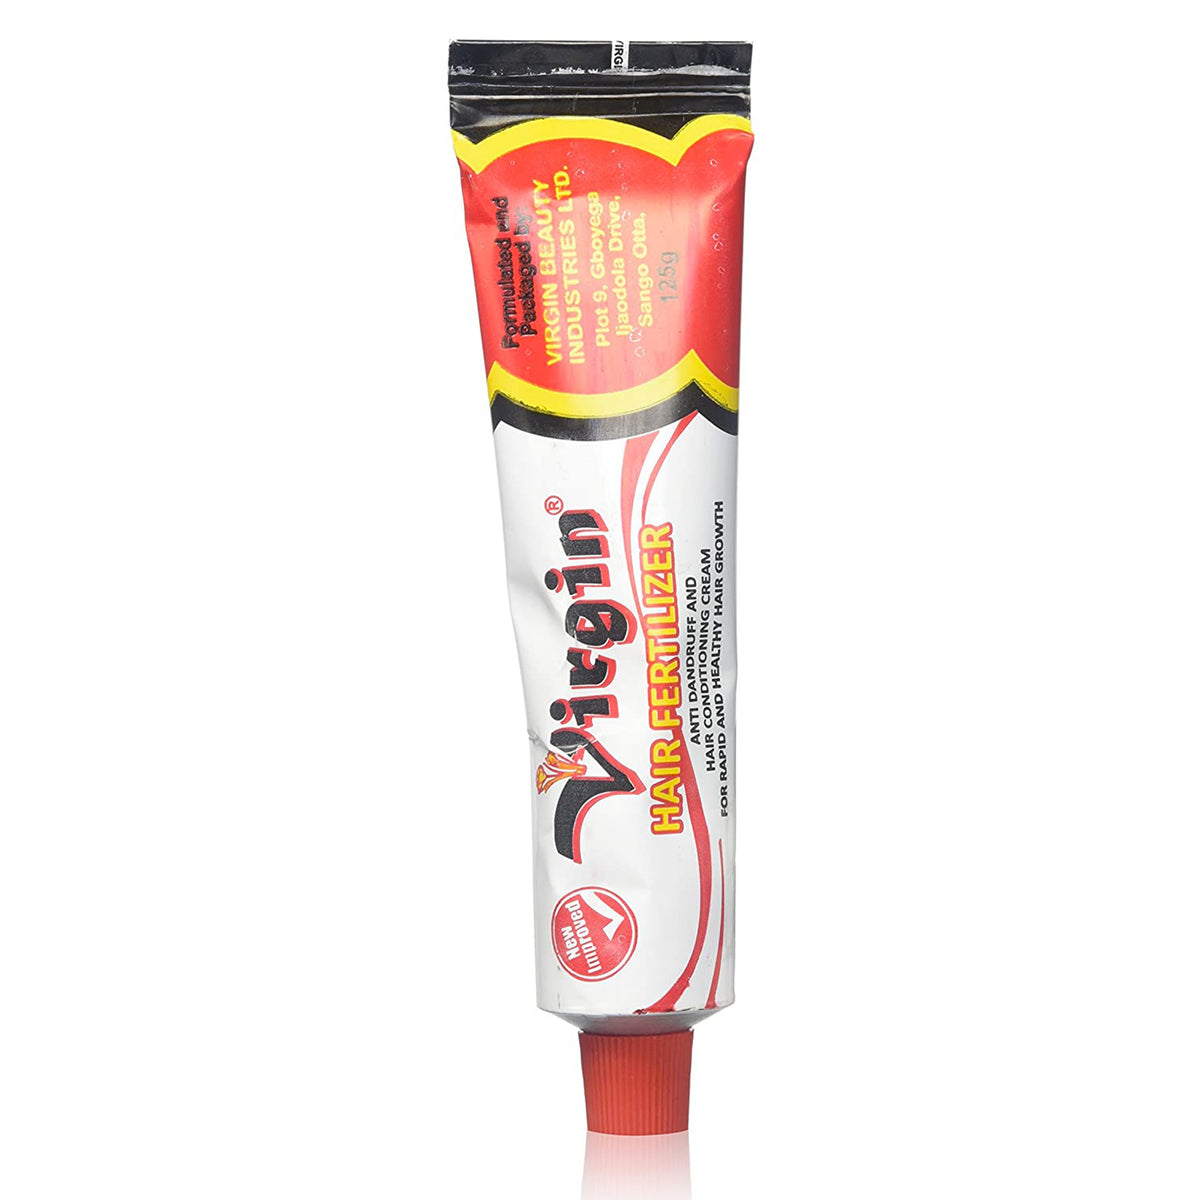 Virgin Hair Fertilizer Anti Dandruff And Conditioning Cream 125g- AQ Online